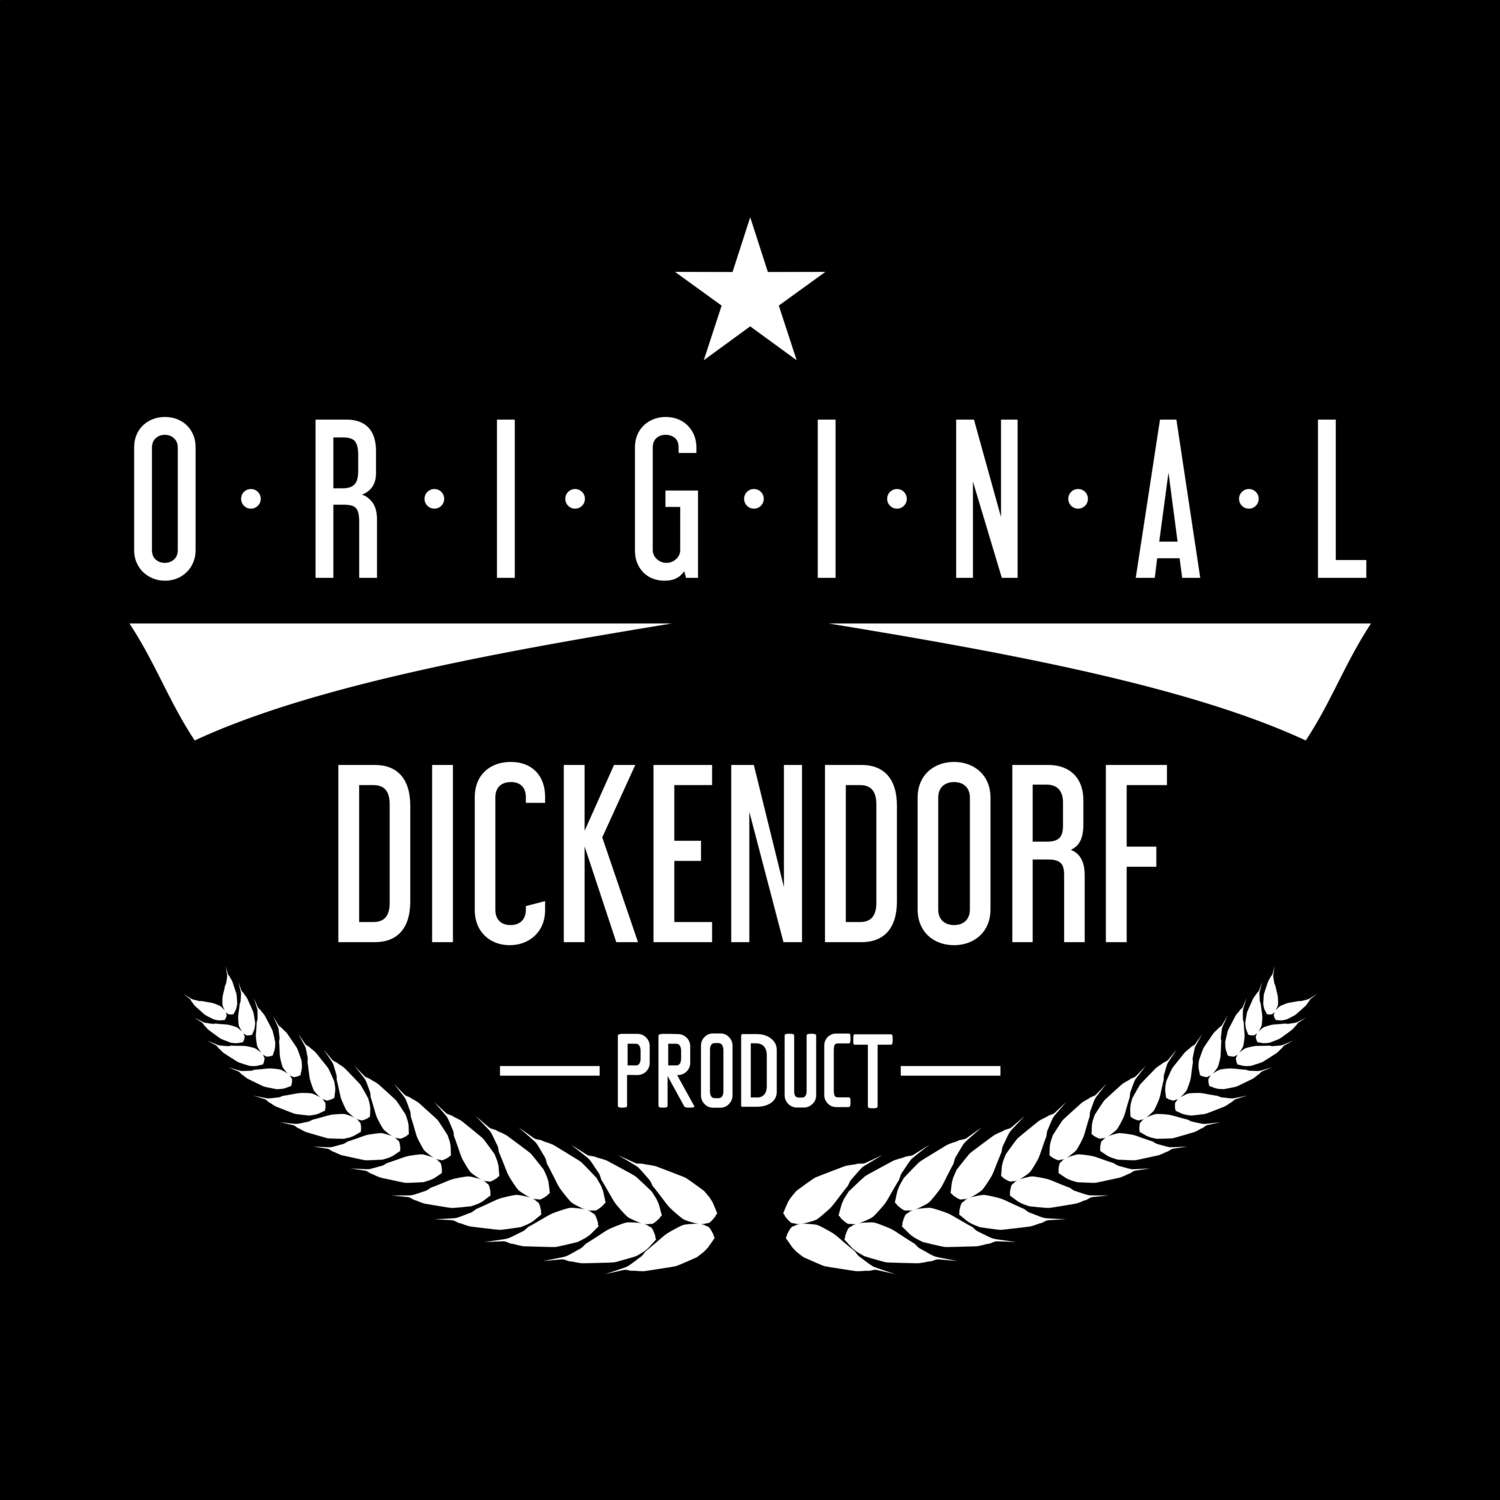 Dickendorf T-Shirt »Original Product«